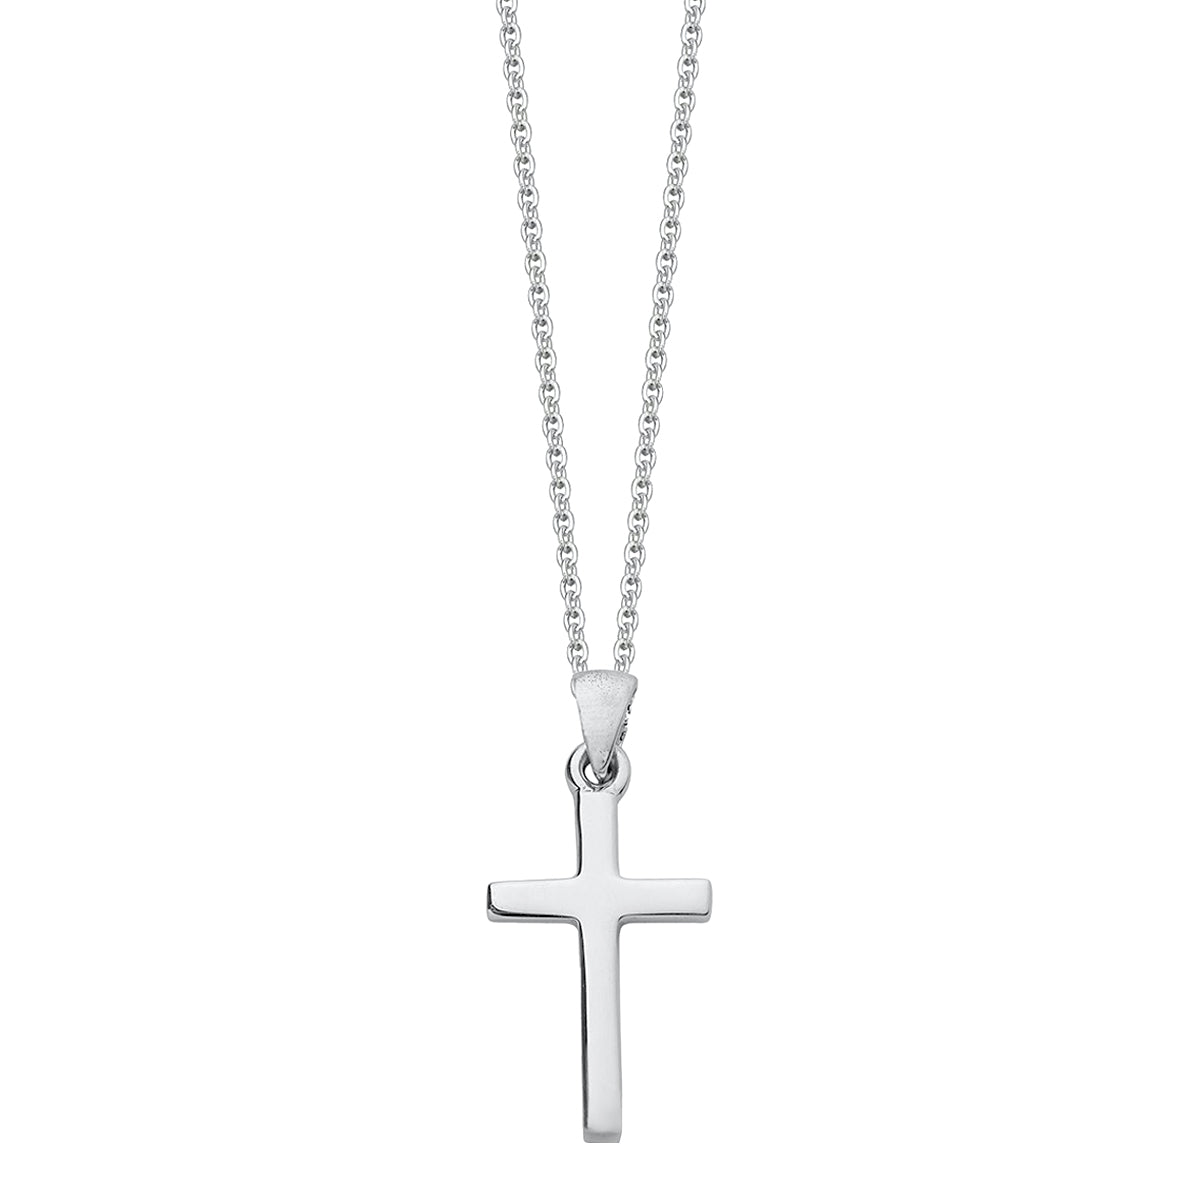 Slim silver cross pendant